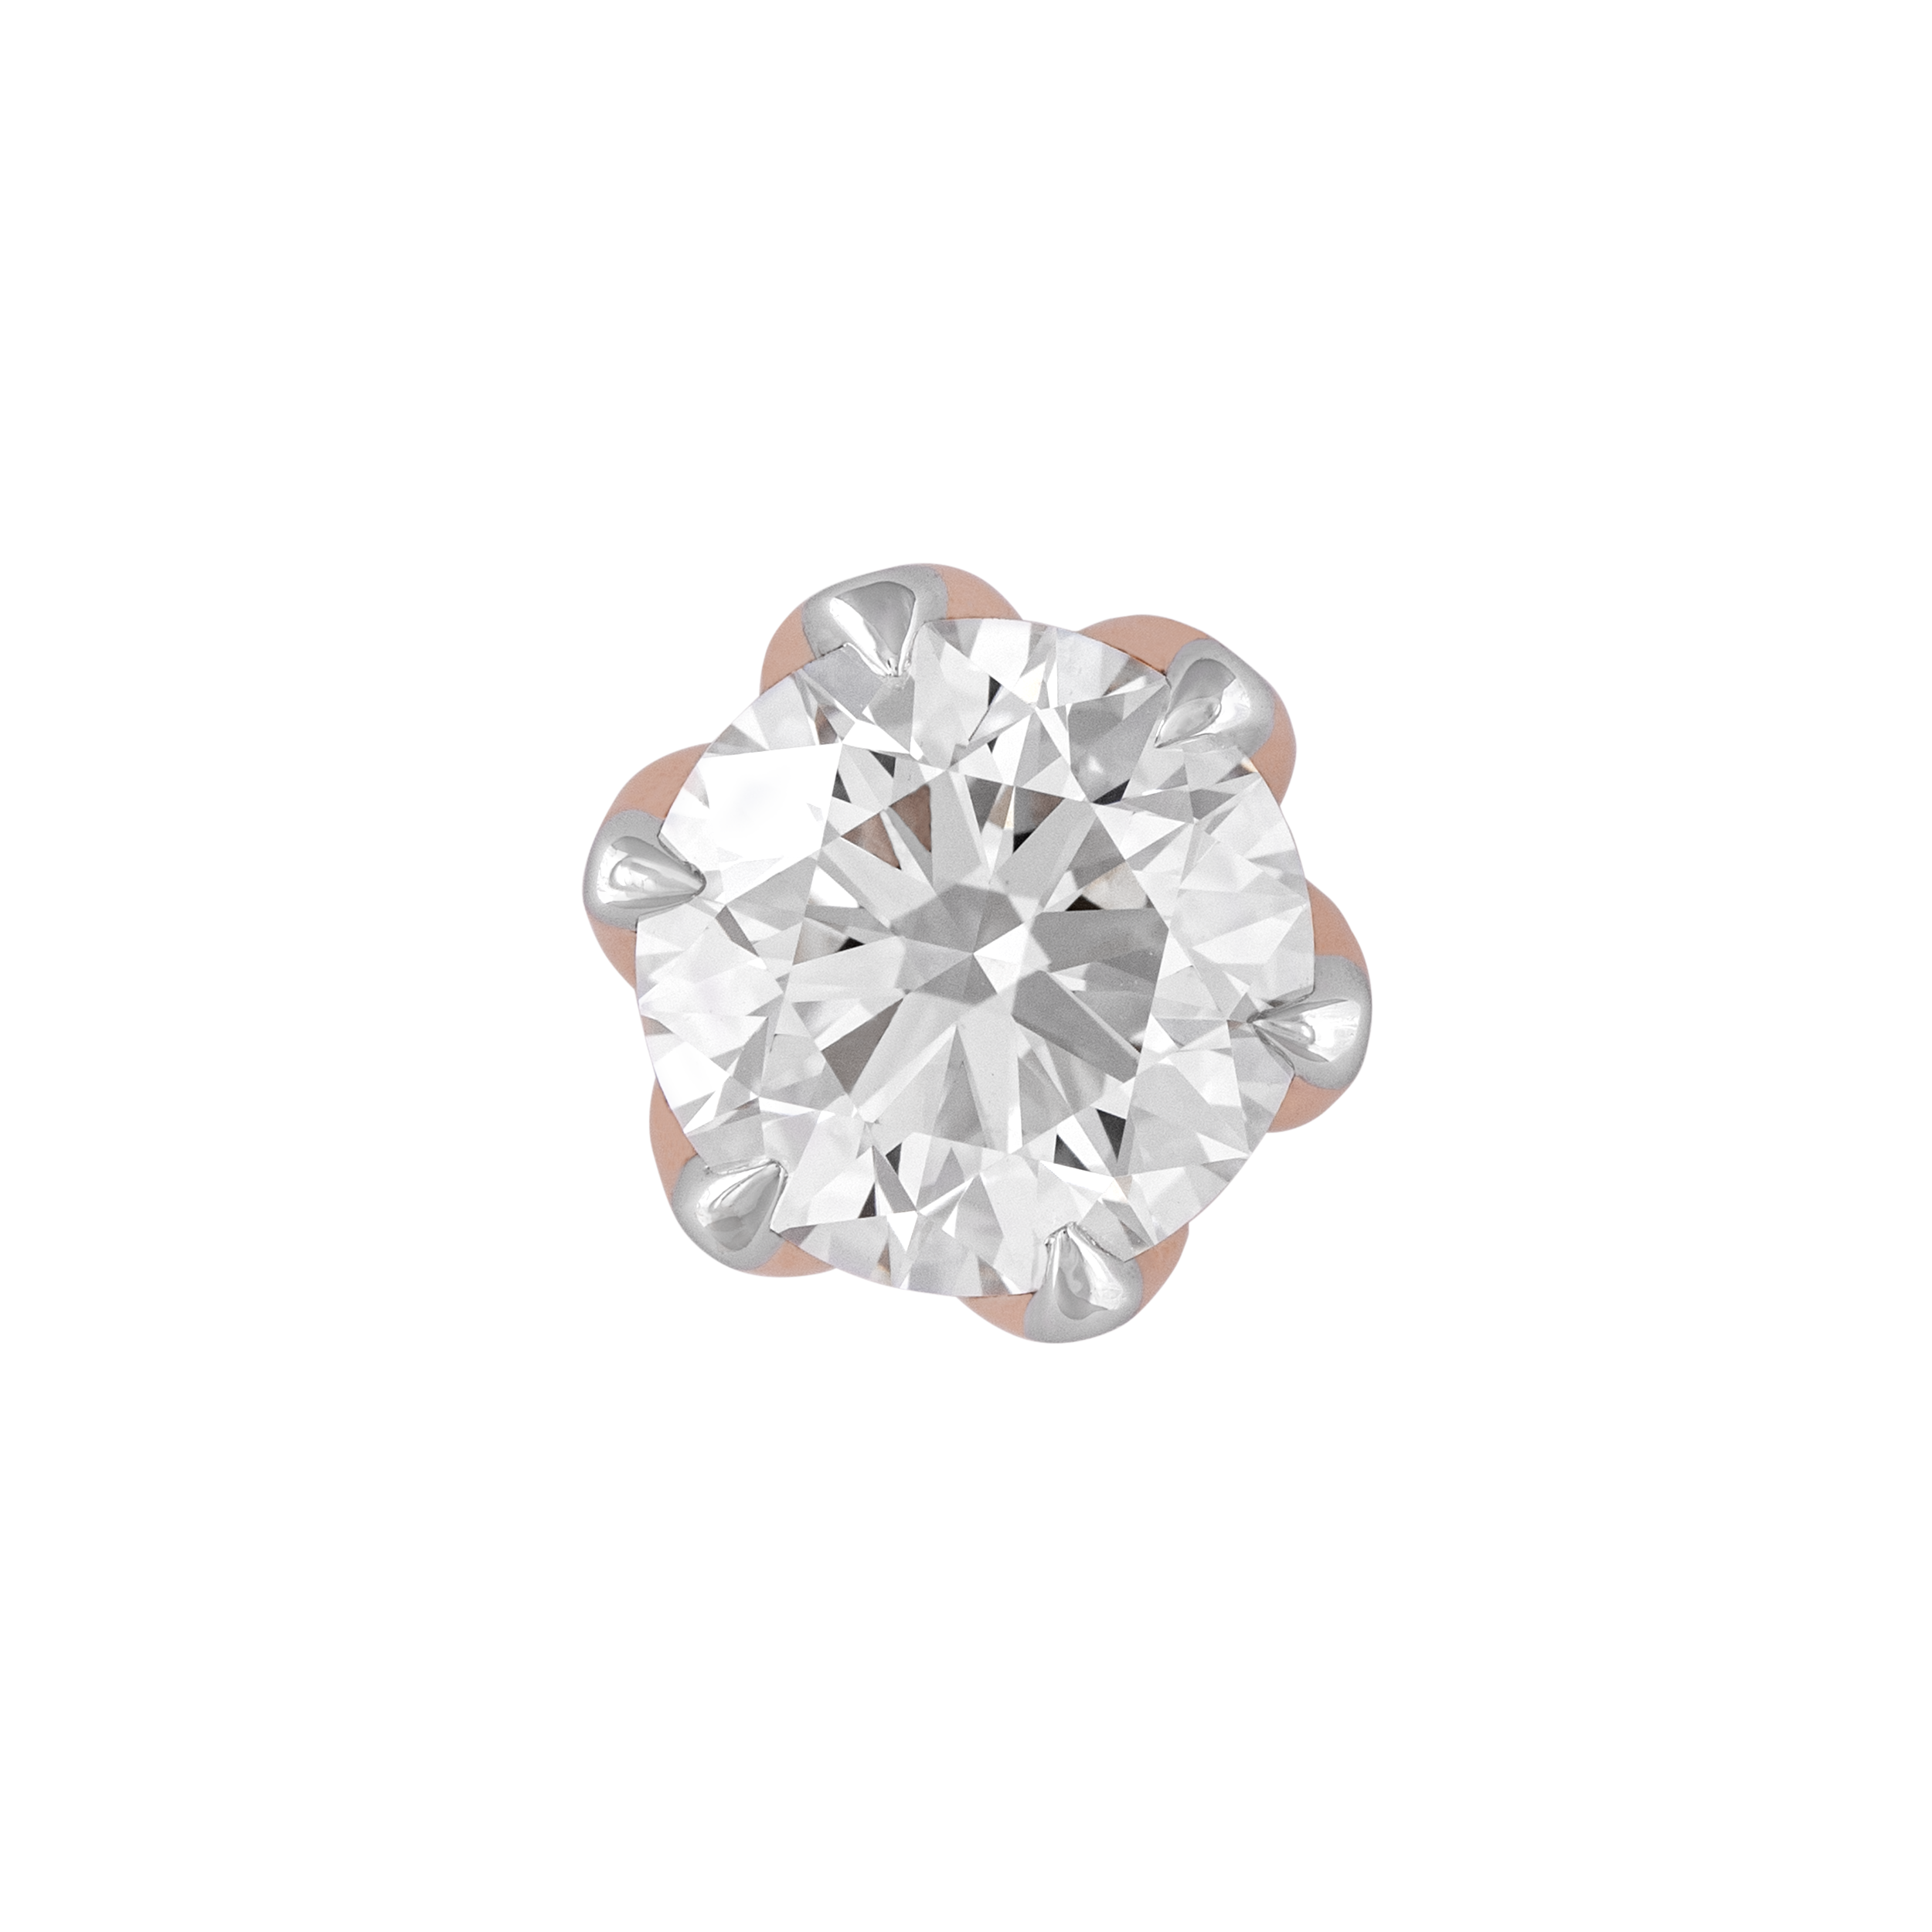 Statement Lab Grown Diamonds Studs | SKU: 0019363011